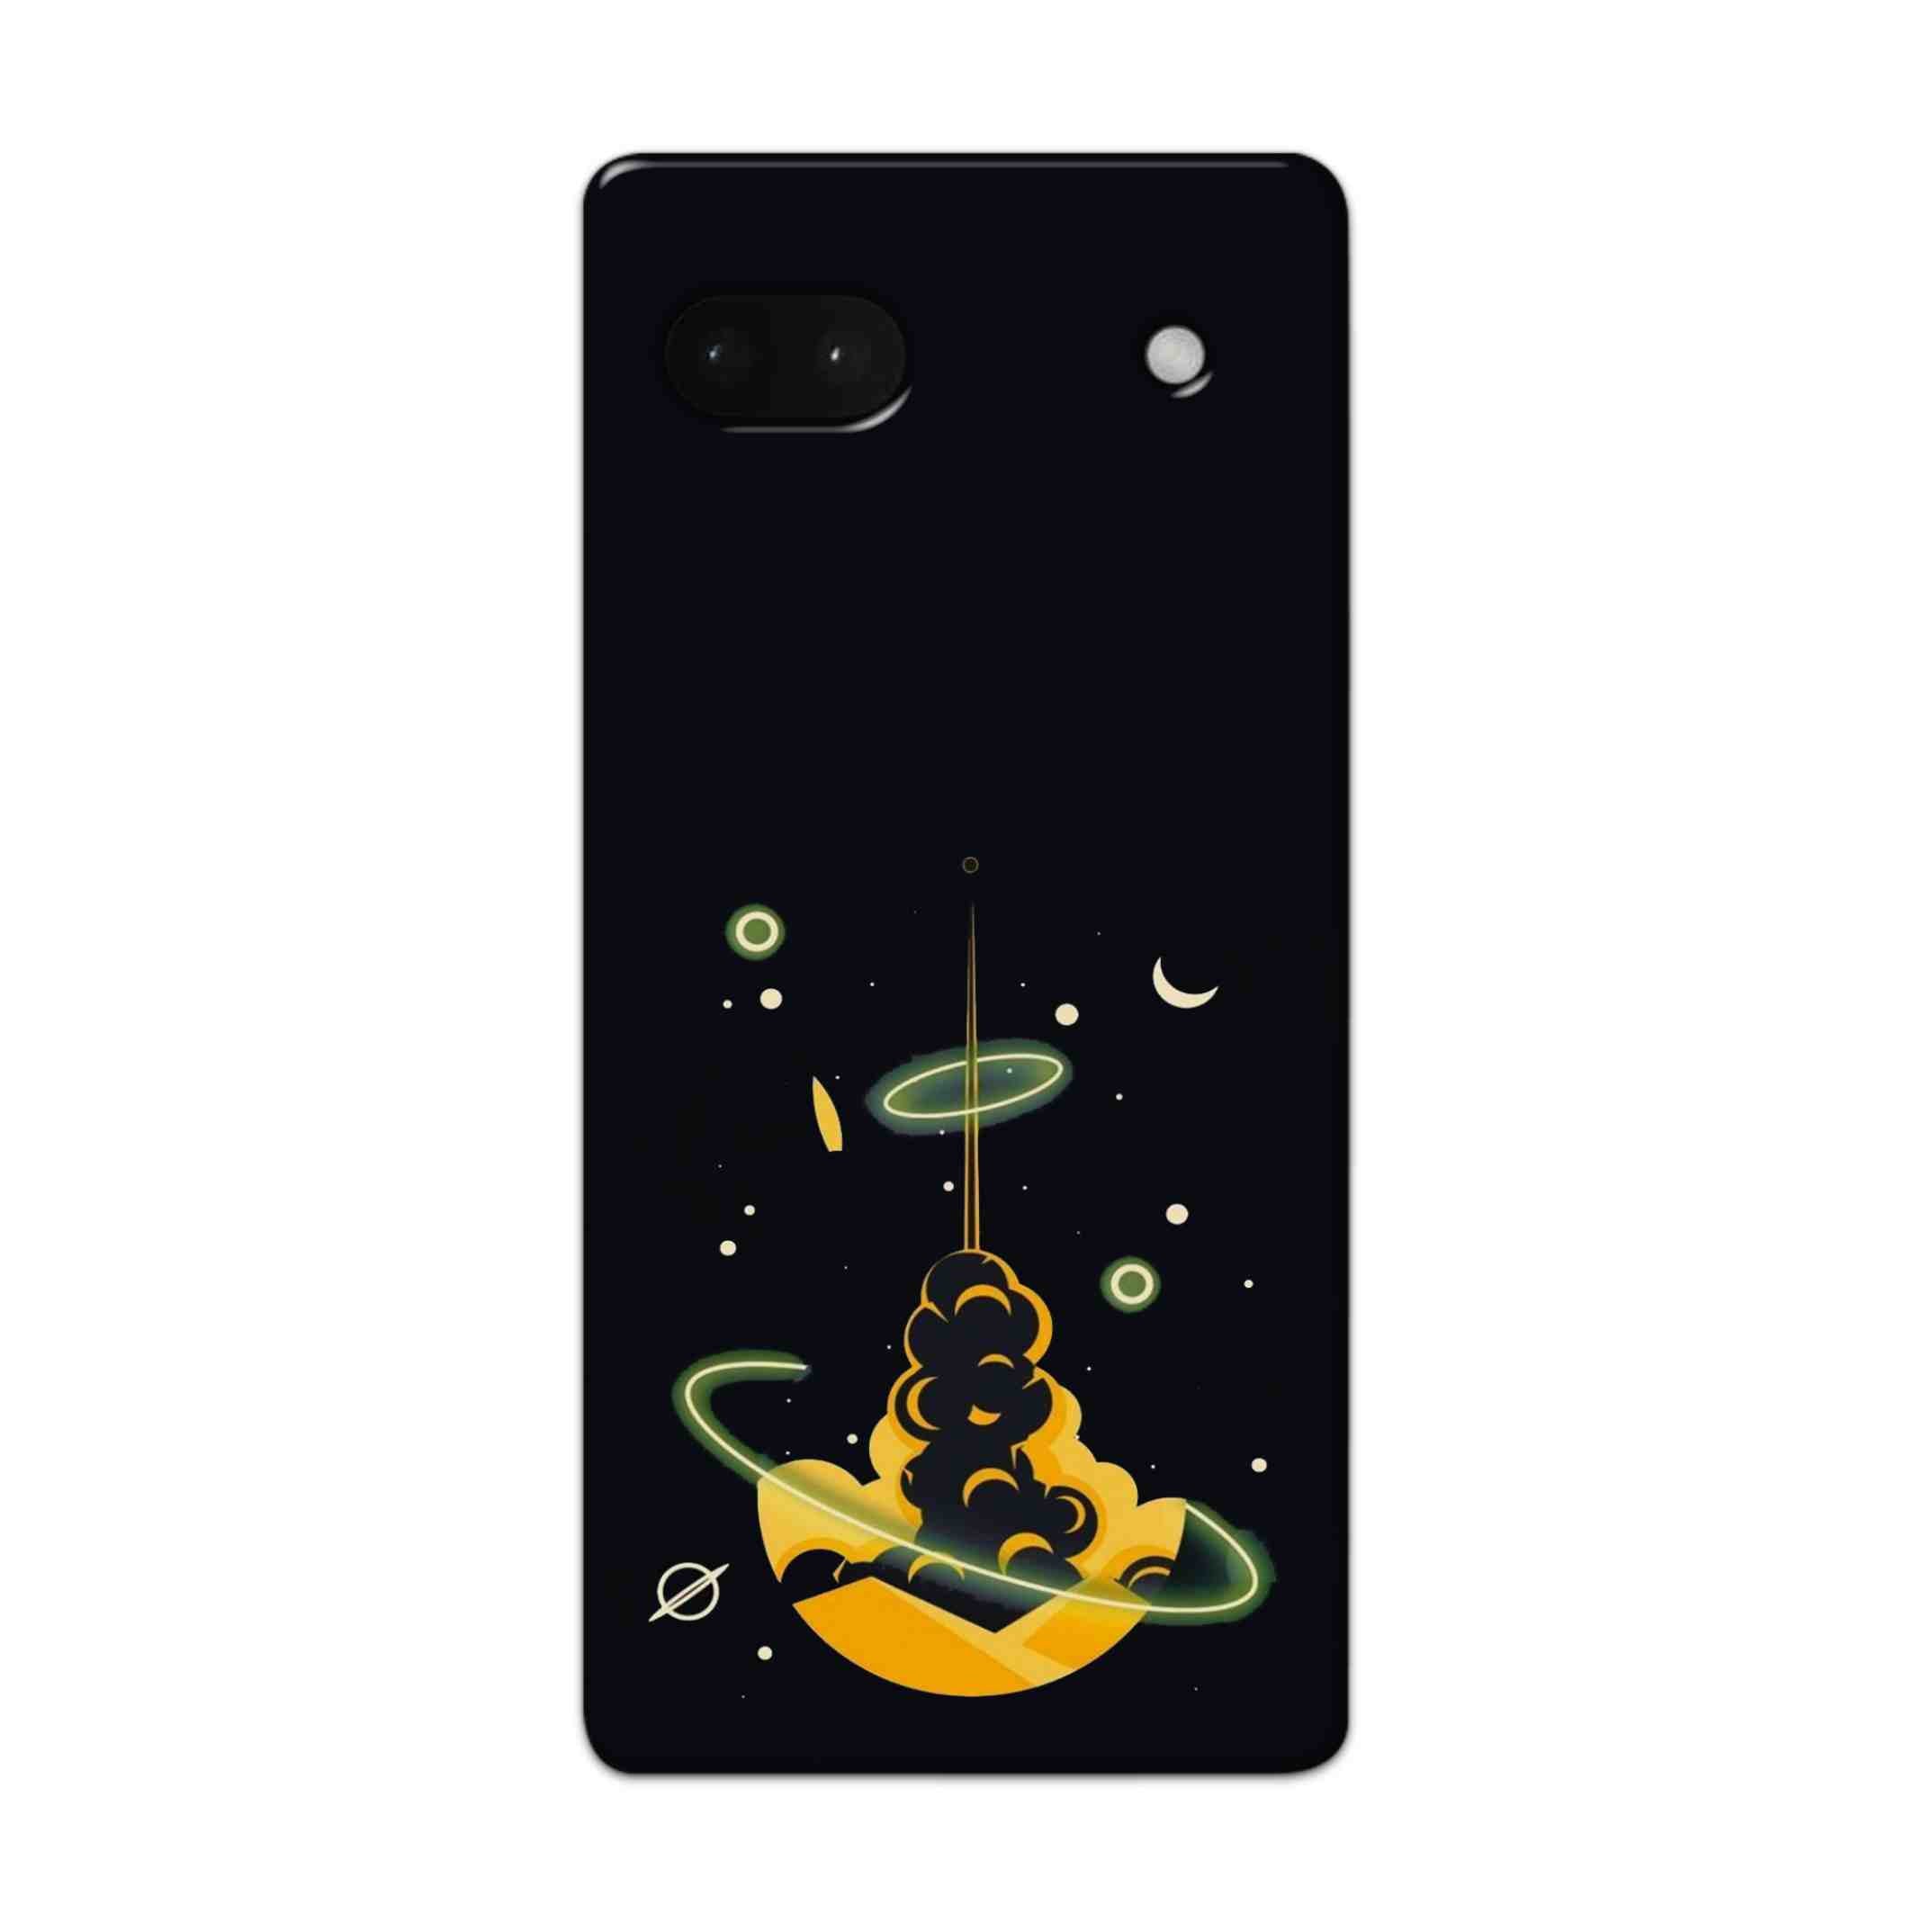 Buy Moon Hard Back Mobile Phone Case Cover For Google Pixel 6a Online